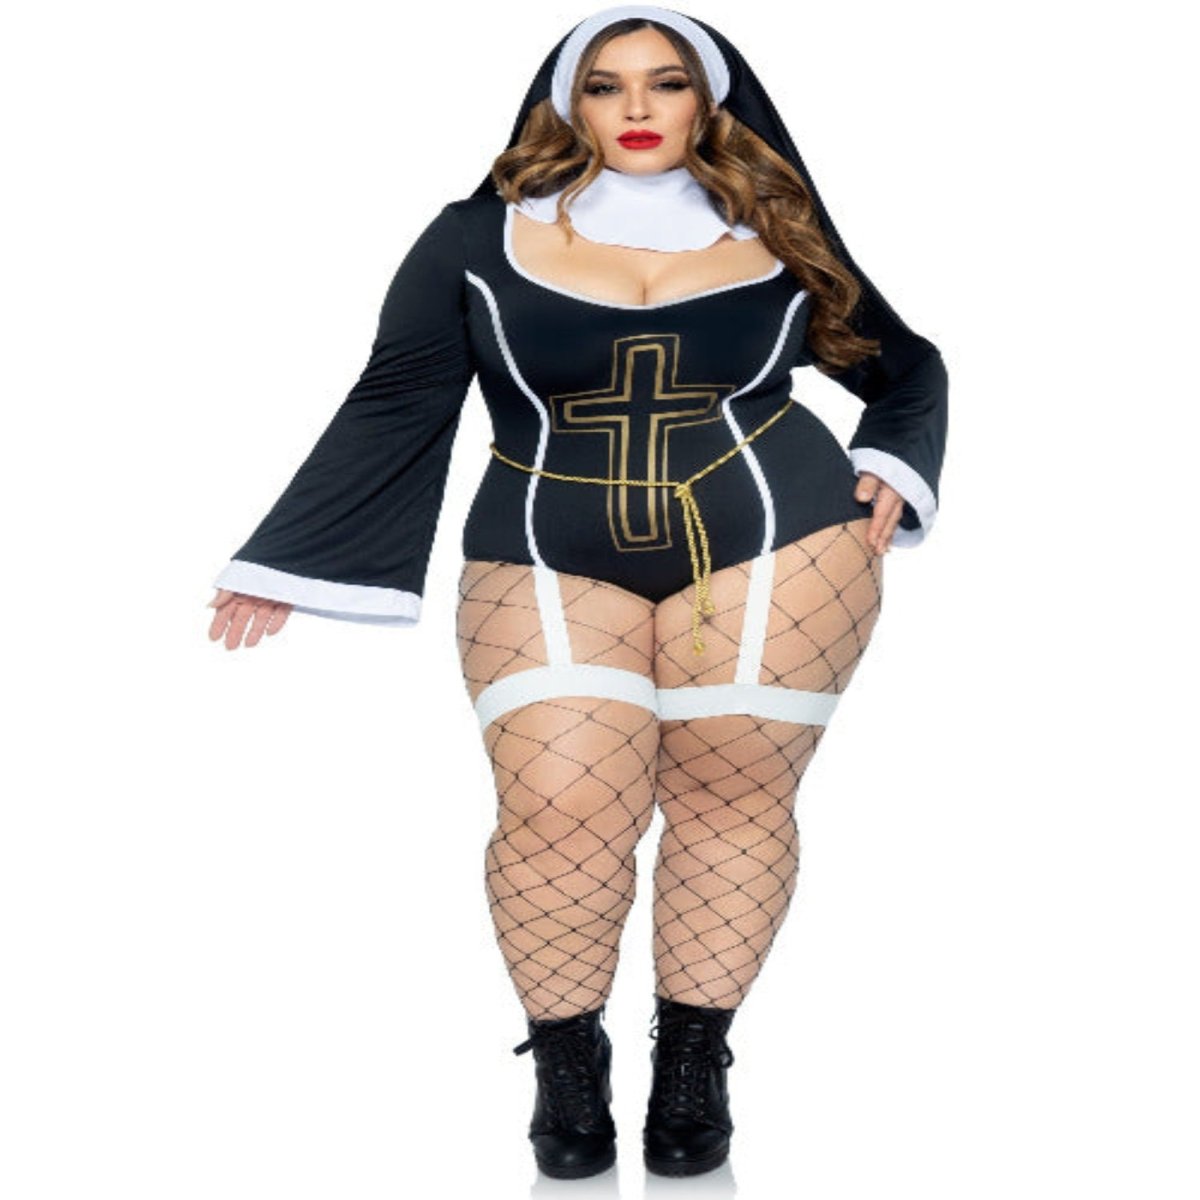 Plus Sister Sin Nun Costume - worldclasscostumes